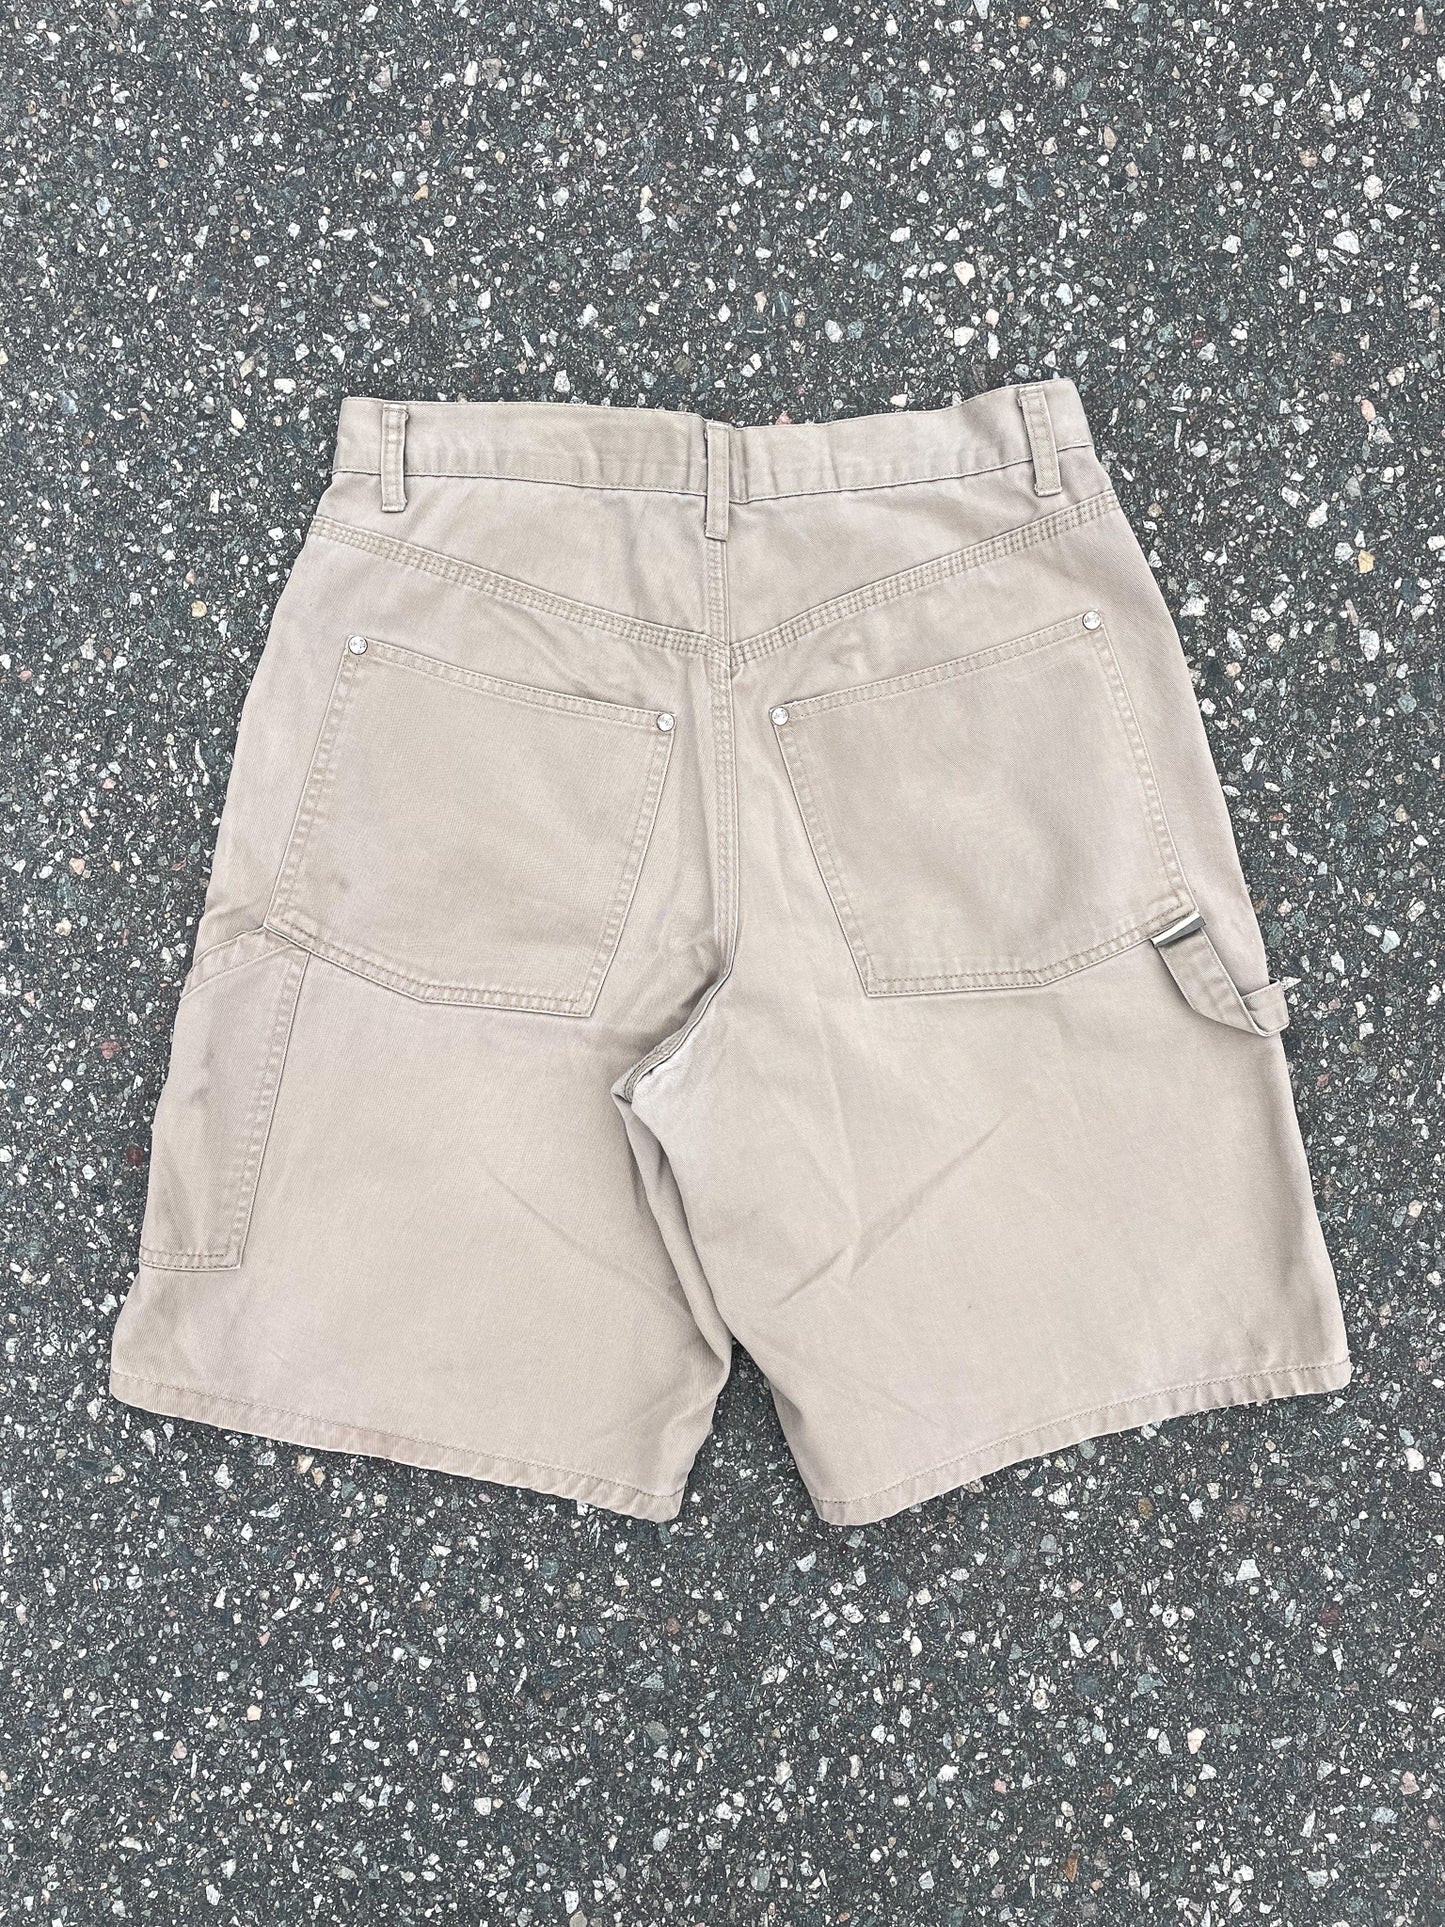 Levi's Silvertab Khaki Shorts—[32]